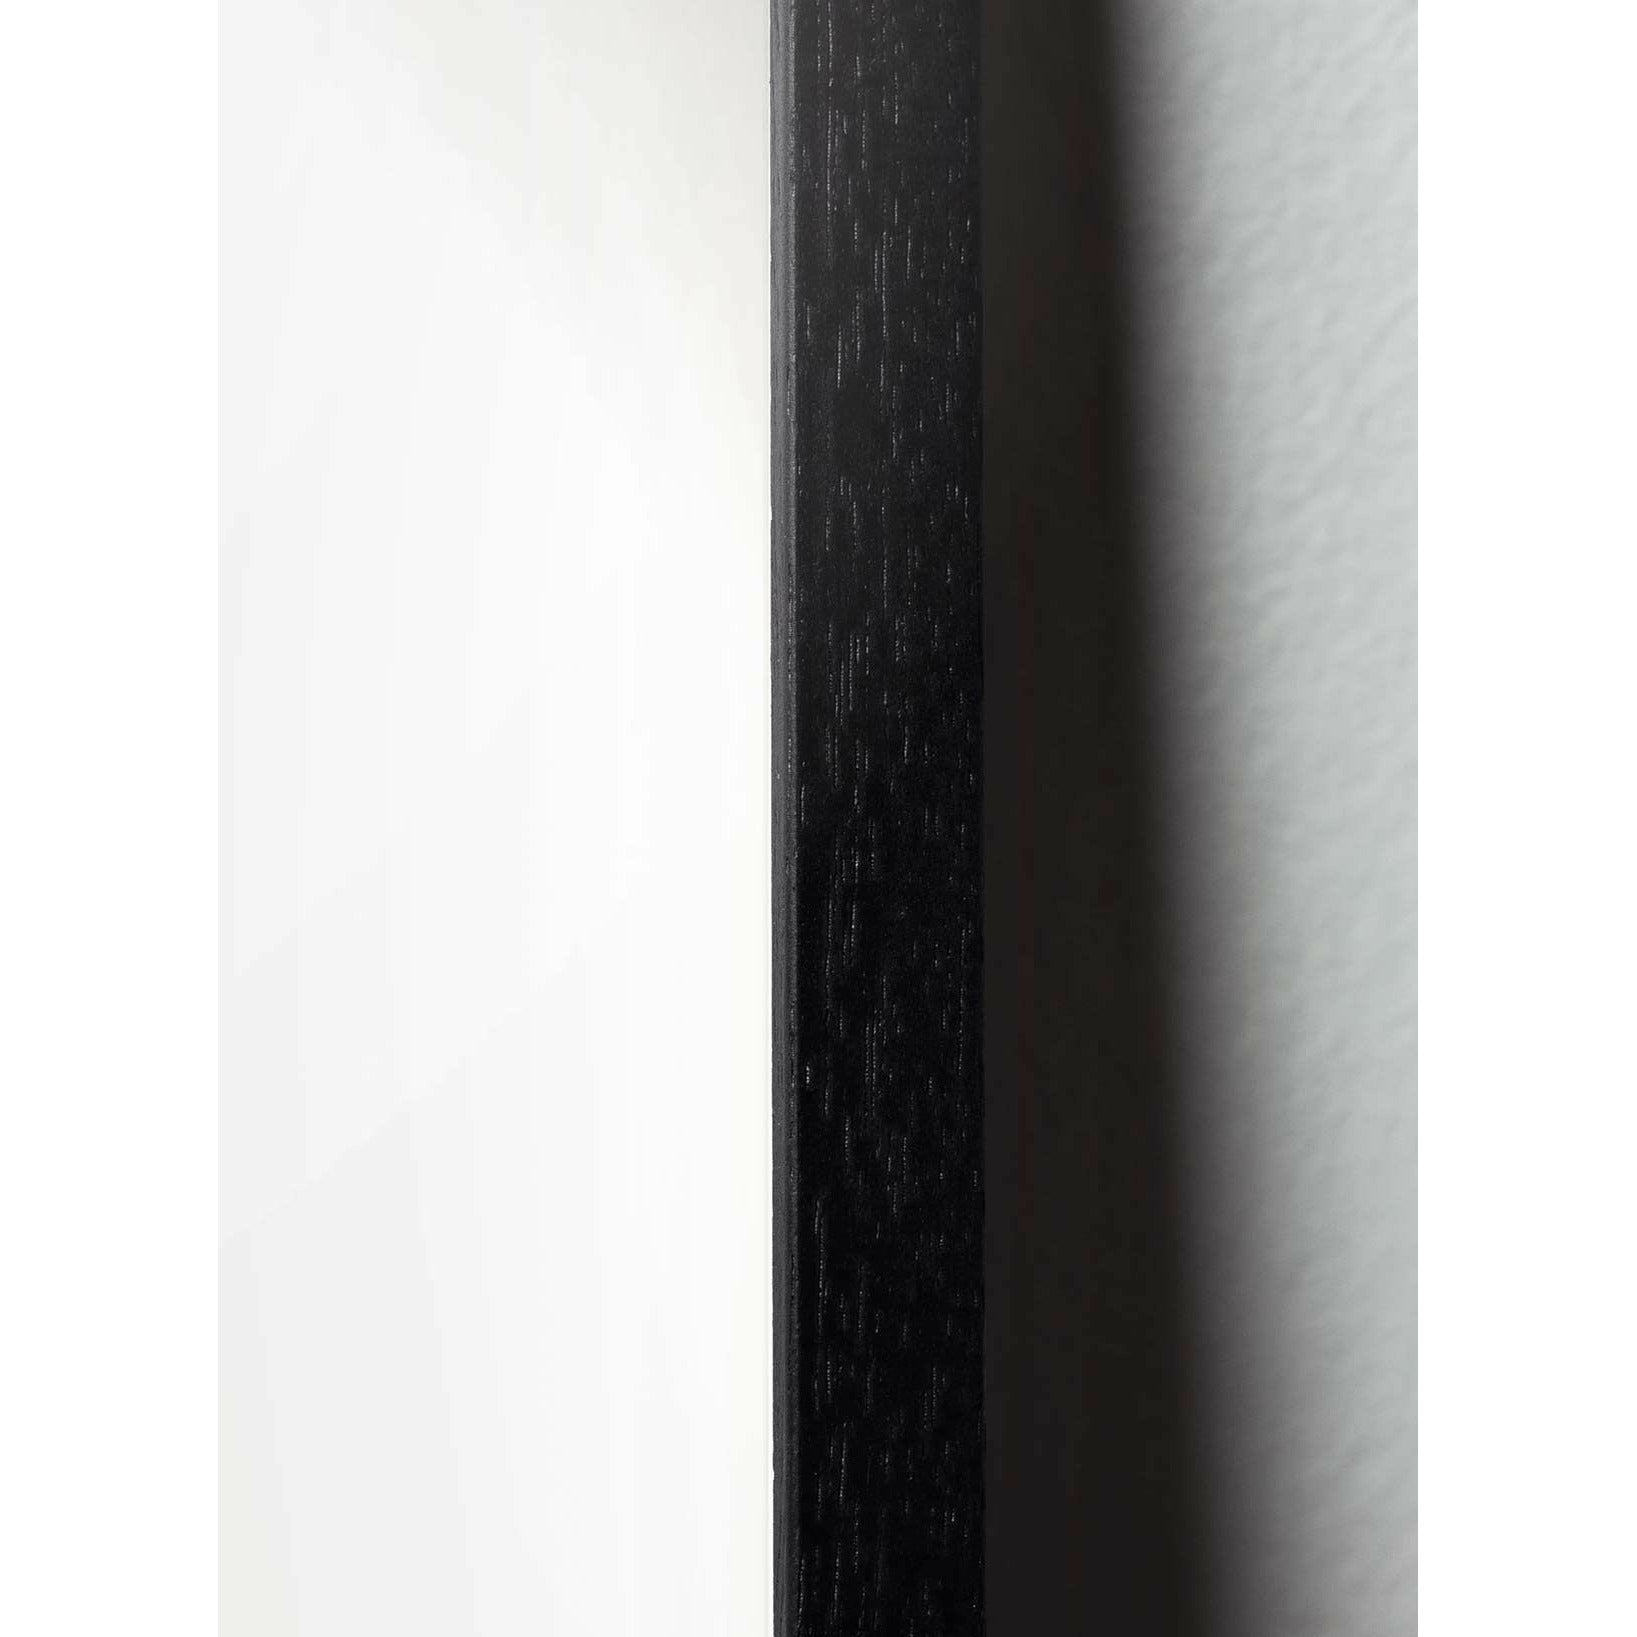 Plakát Eierparade Brainchild, rám vyrobený z černého lakovaného dřeva, 30x40 cm